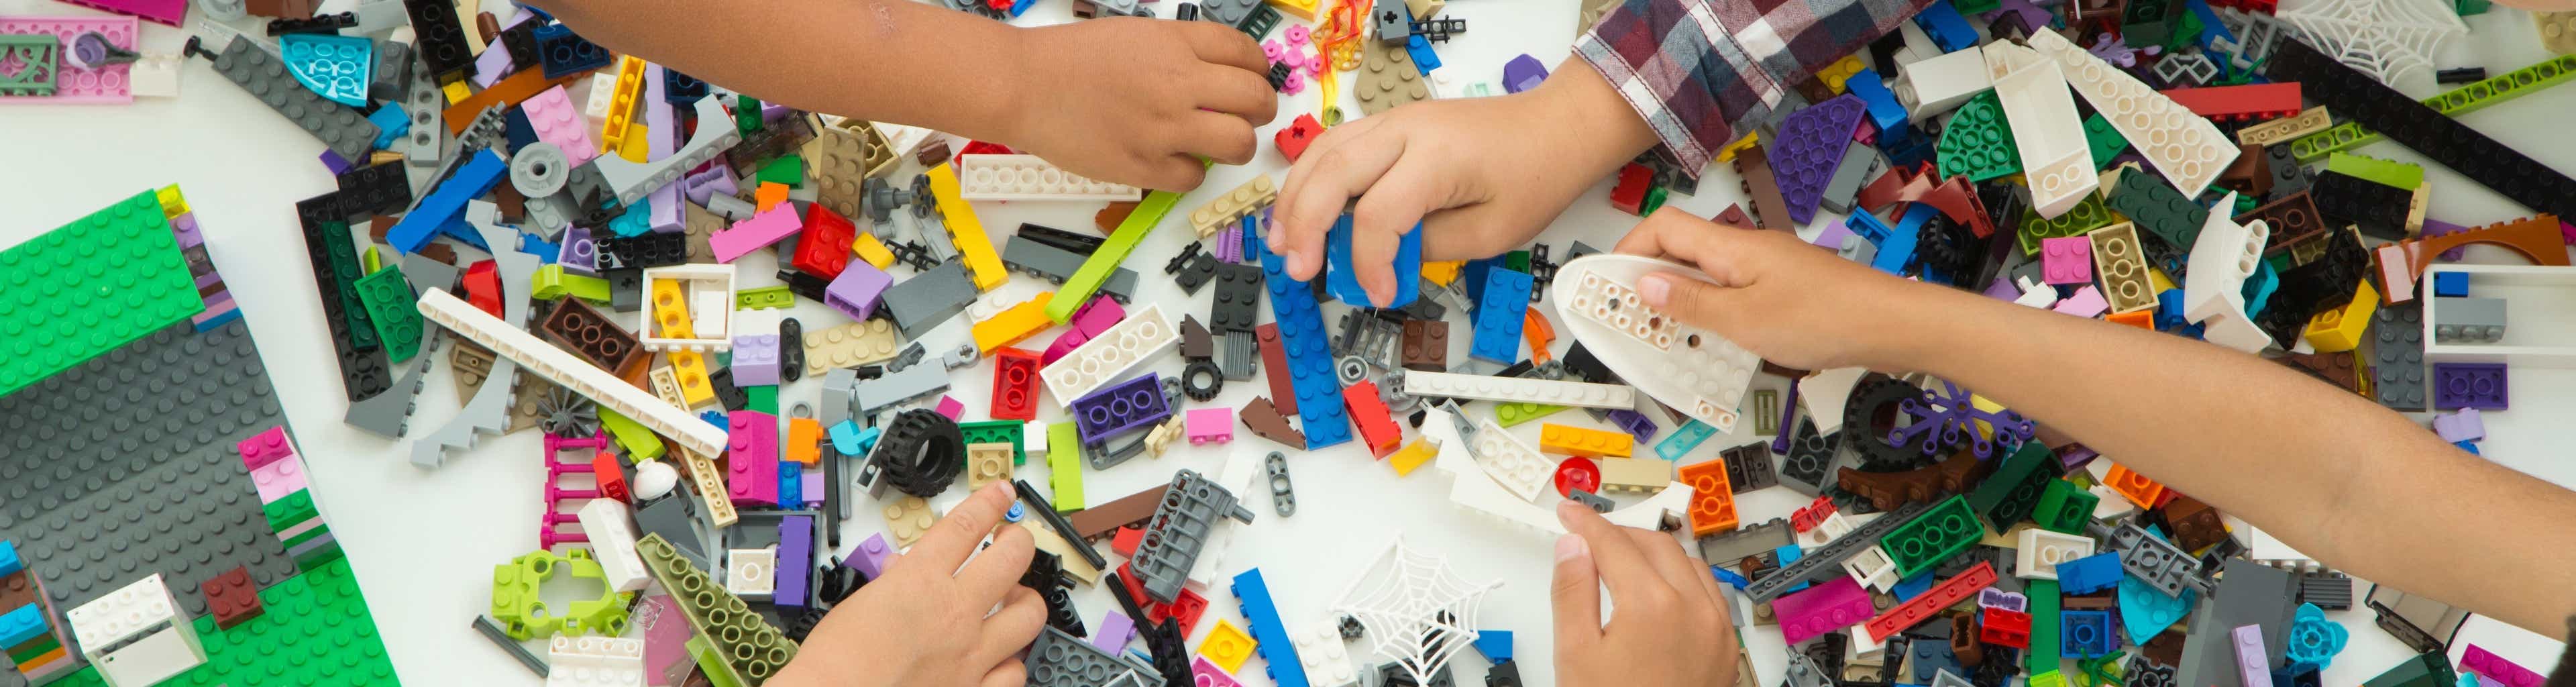 Enig med Cordelia Samtykke Play Day for children - Sustainability - LEGO.com US